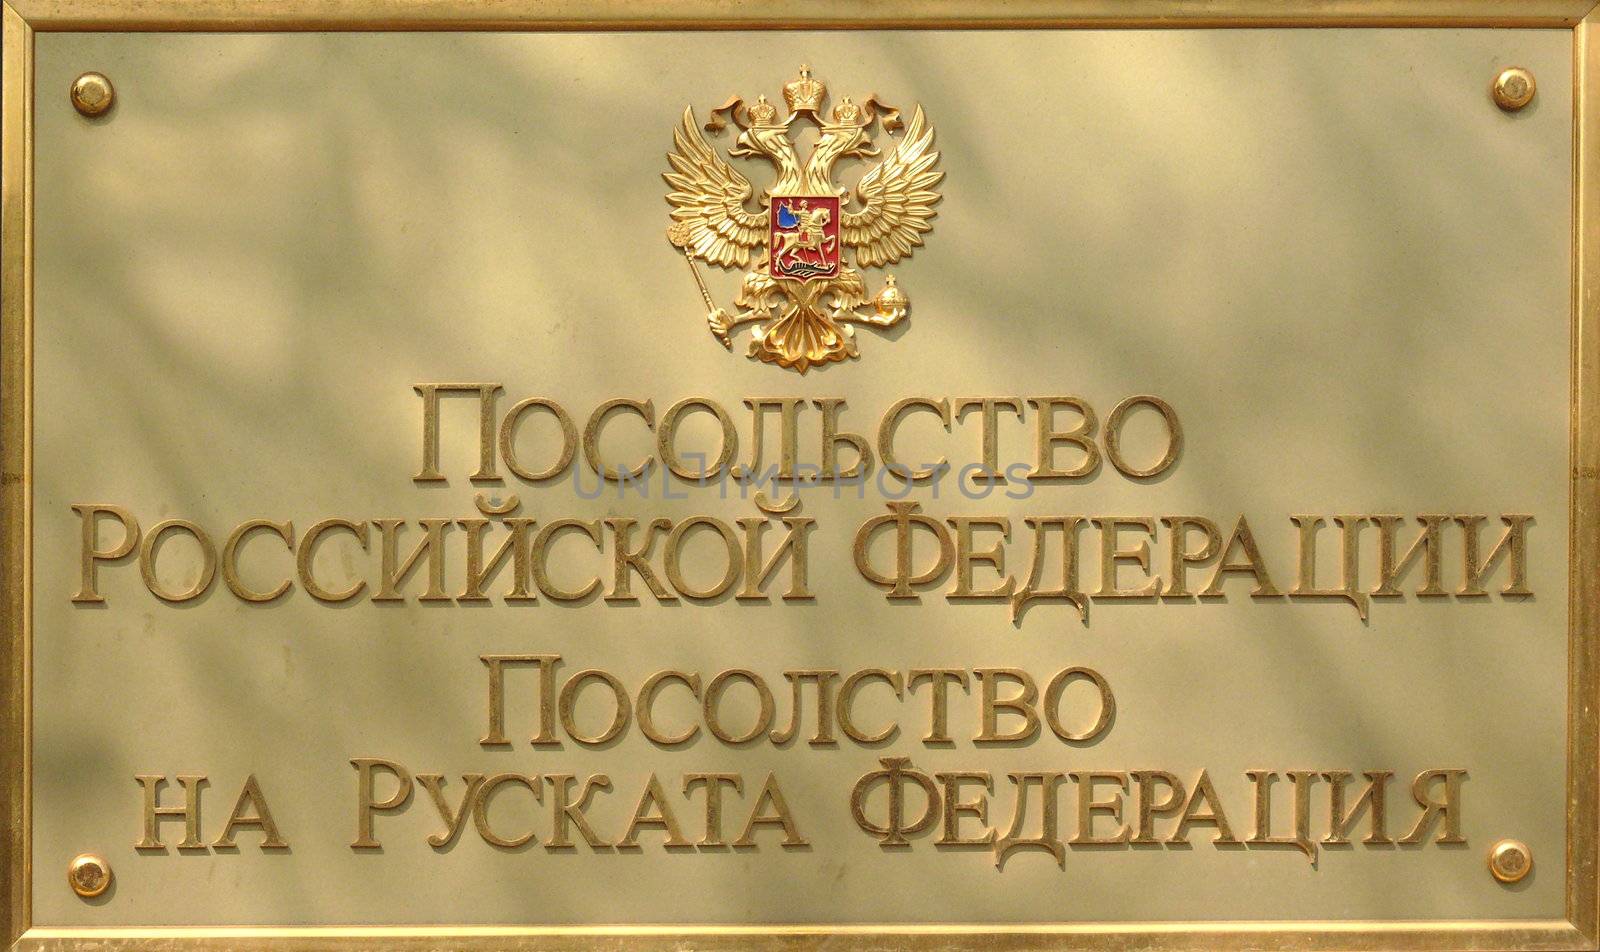 Embassy of Russian Federation in Sofia, Bulgaria by Stoyanov